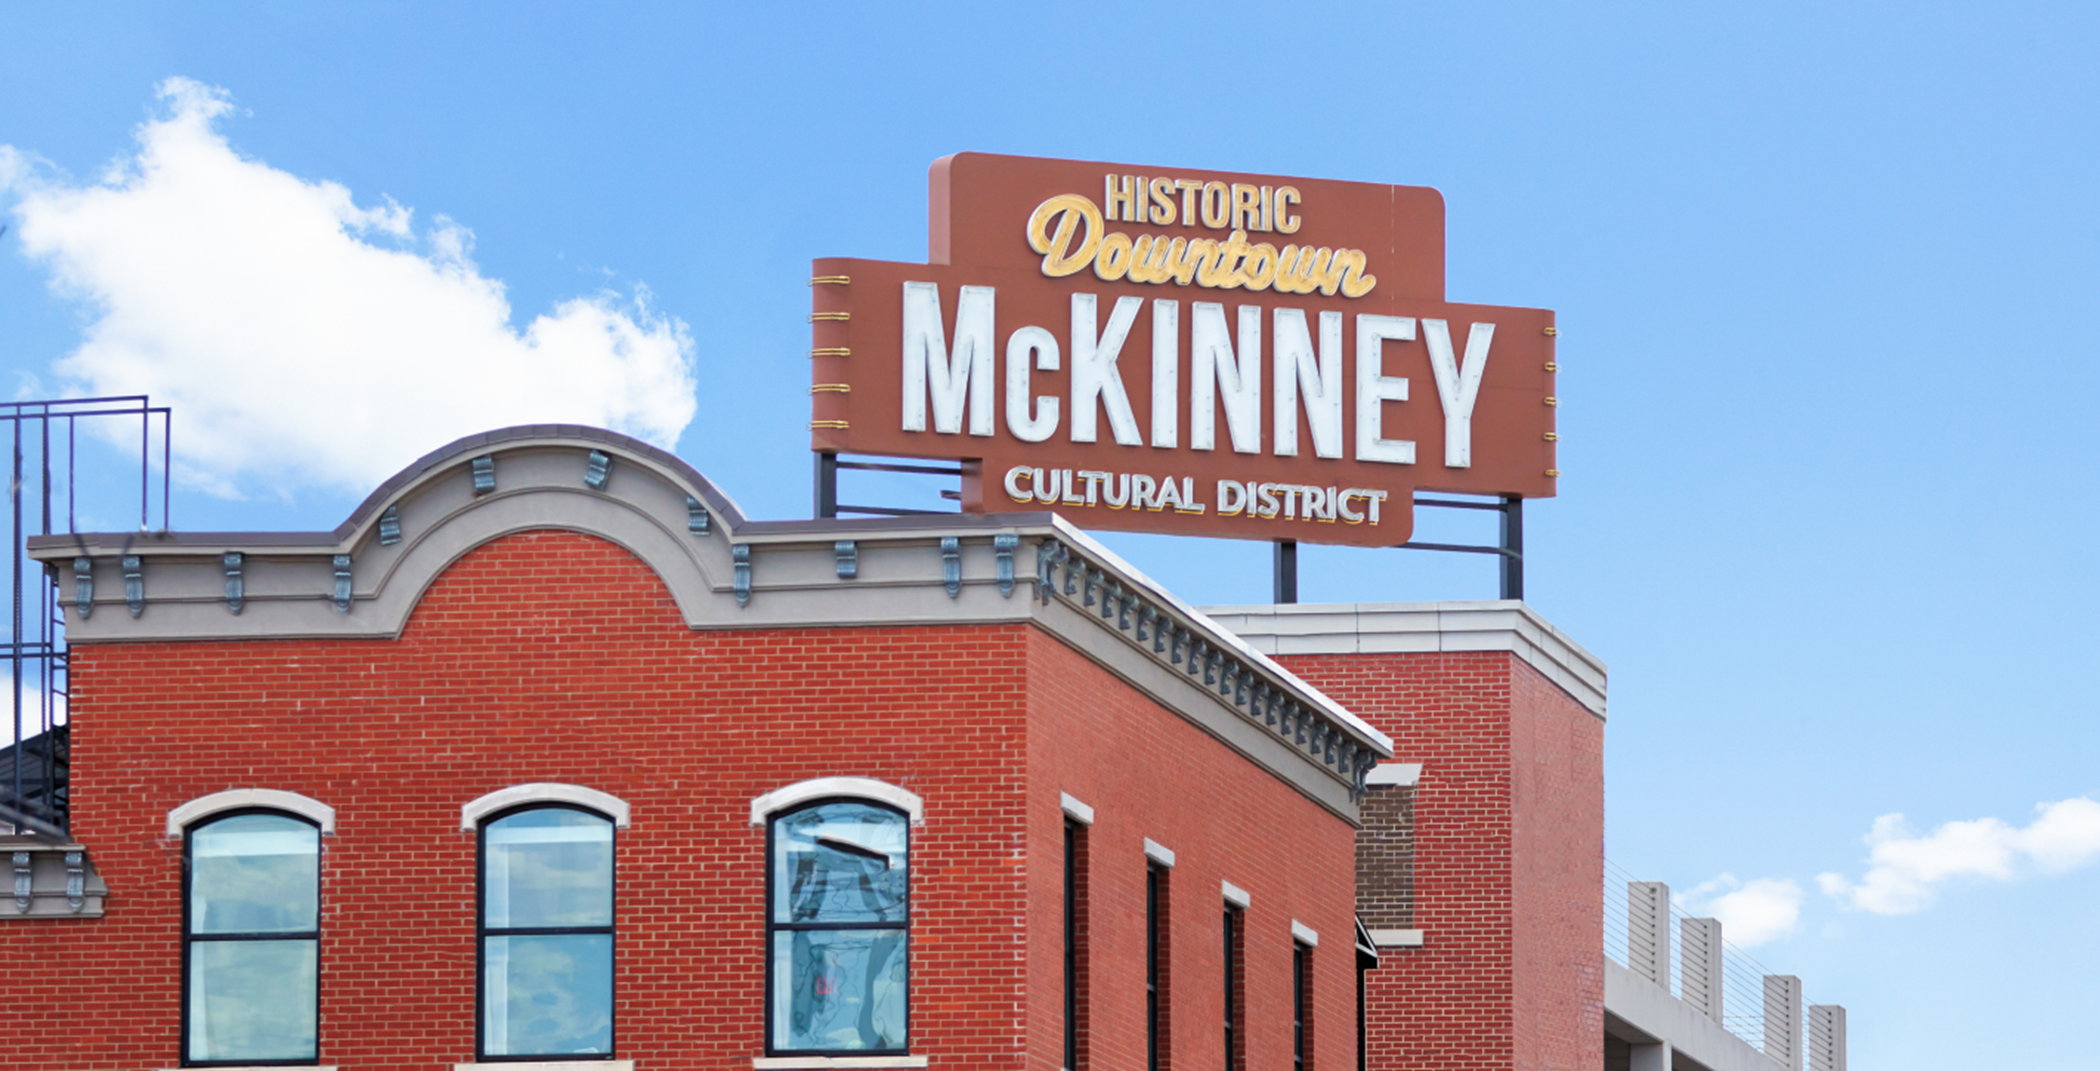 Downtown McKinney